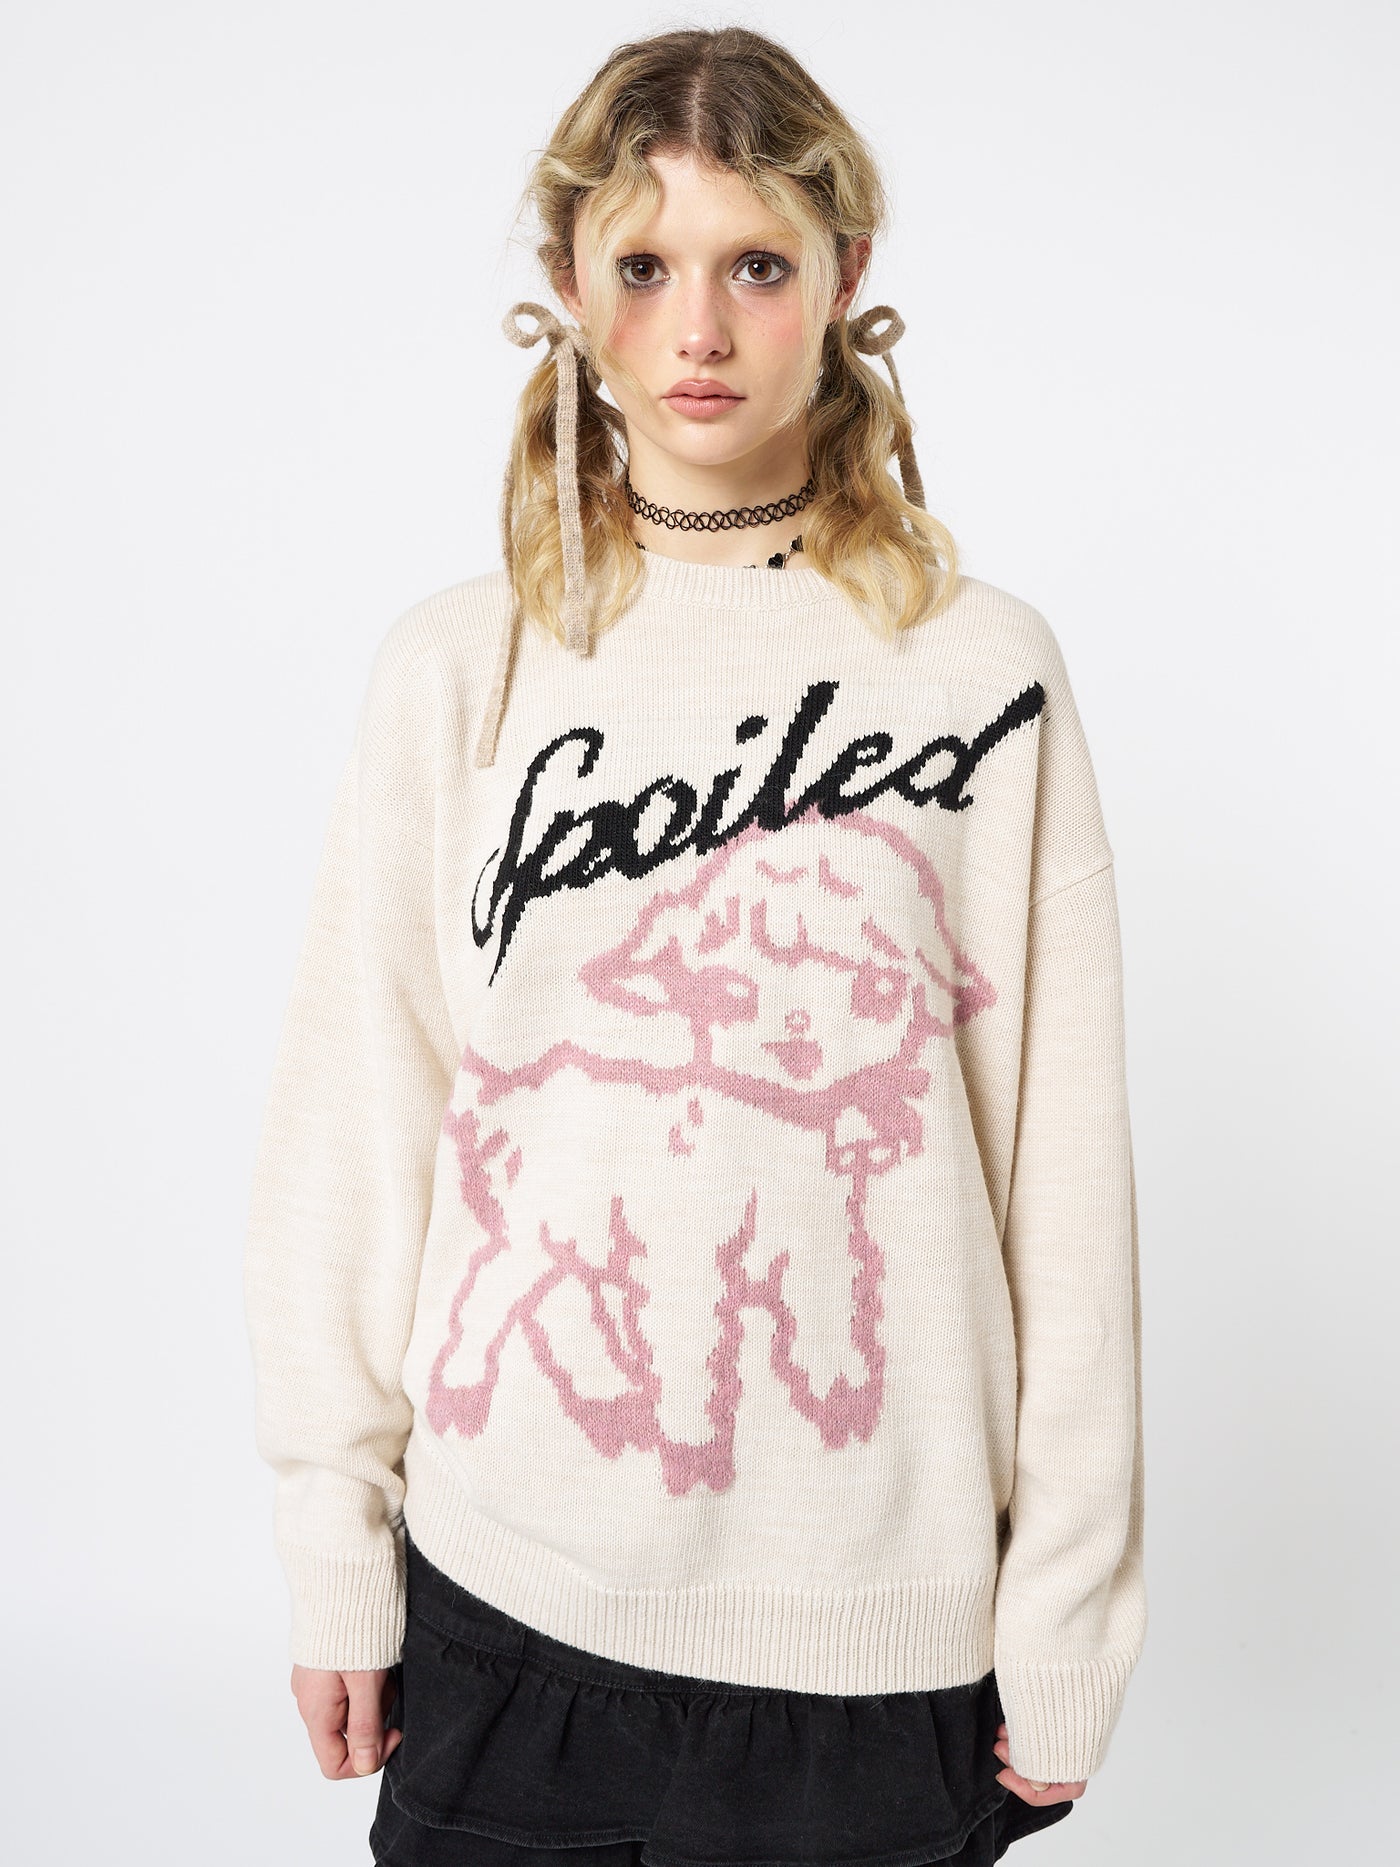 Spoiled Sheep Graphic Knitted Sweater - Minga London